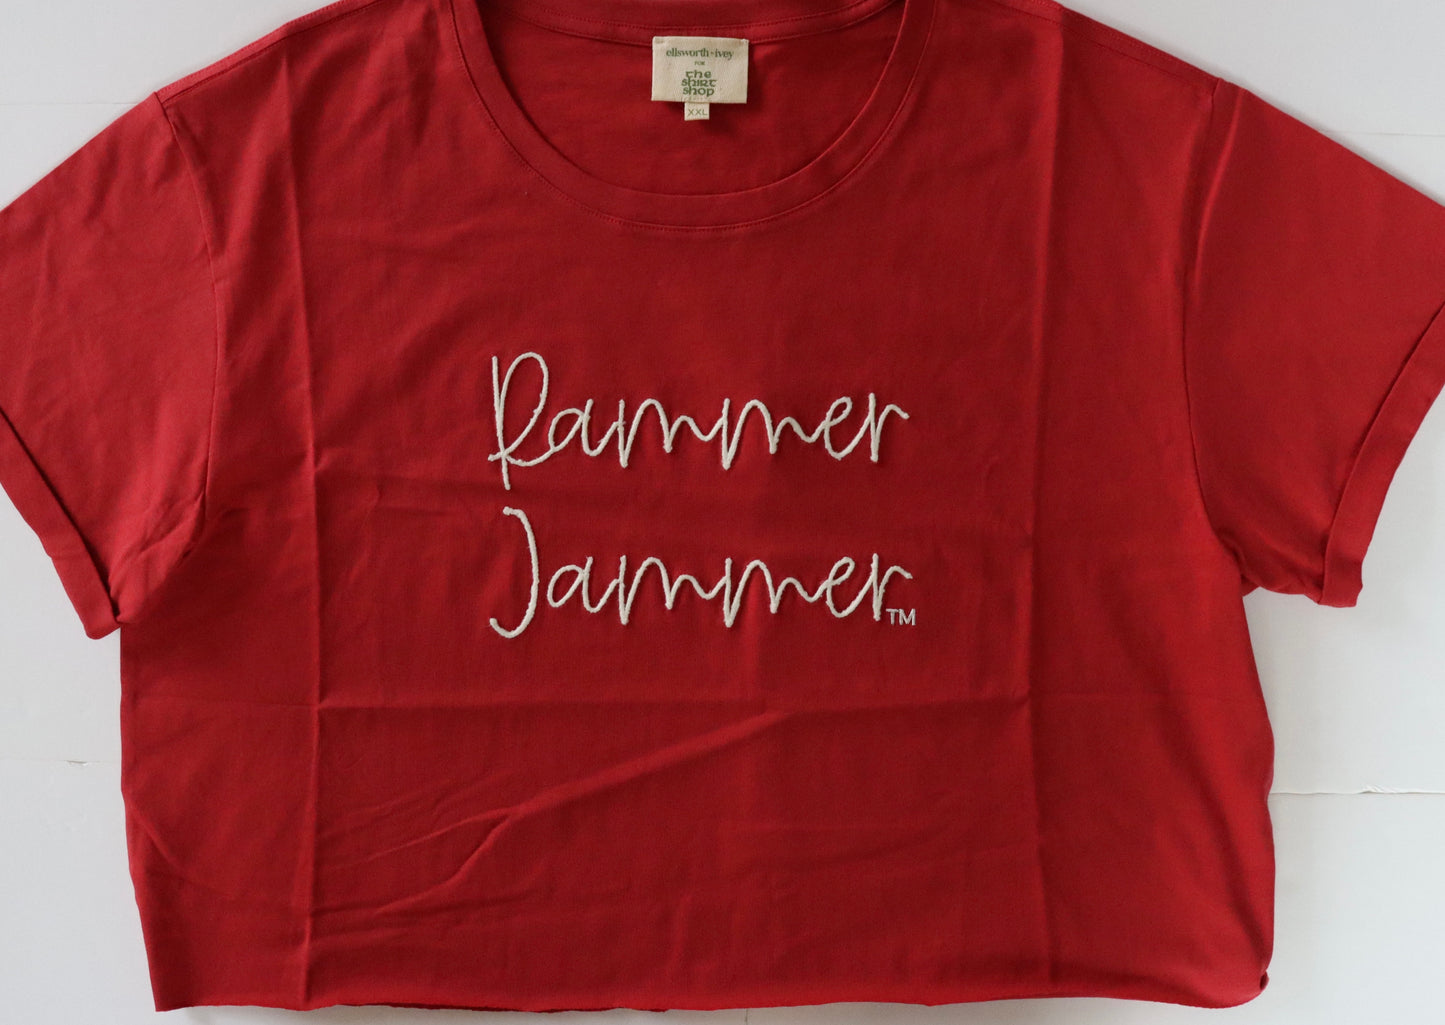 Ellsworth & Ivey Rammer Jammer T-Shirt